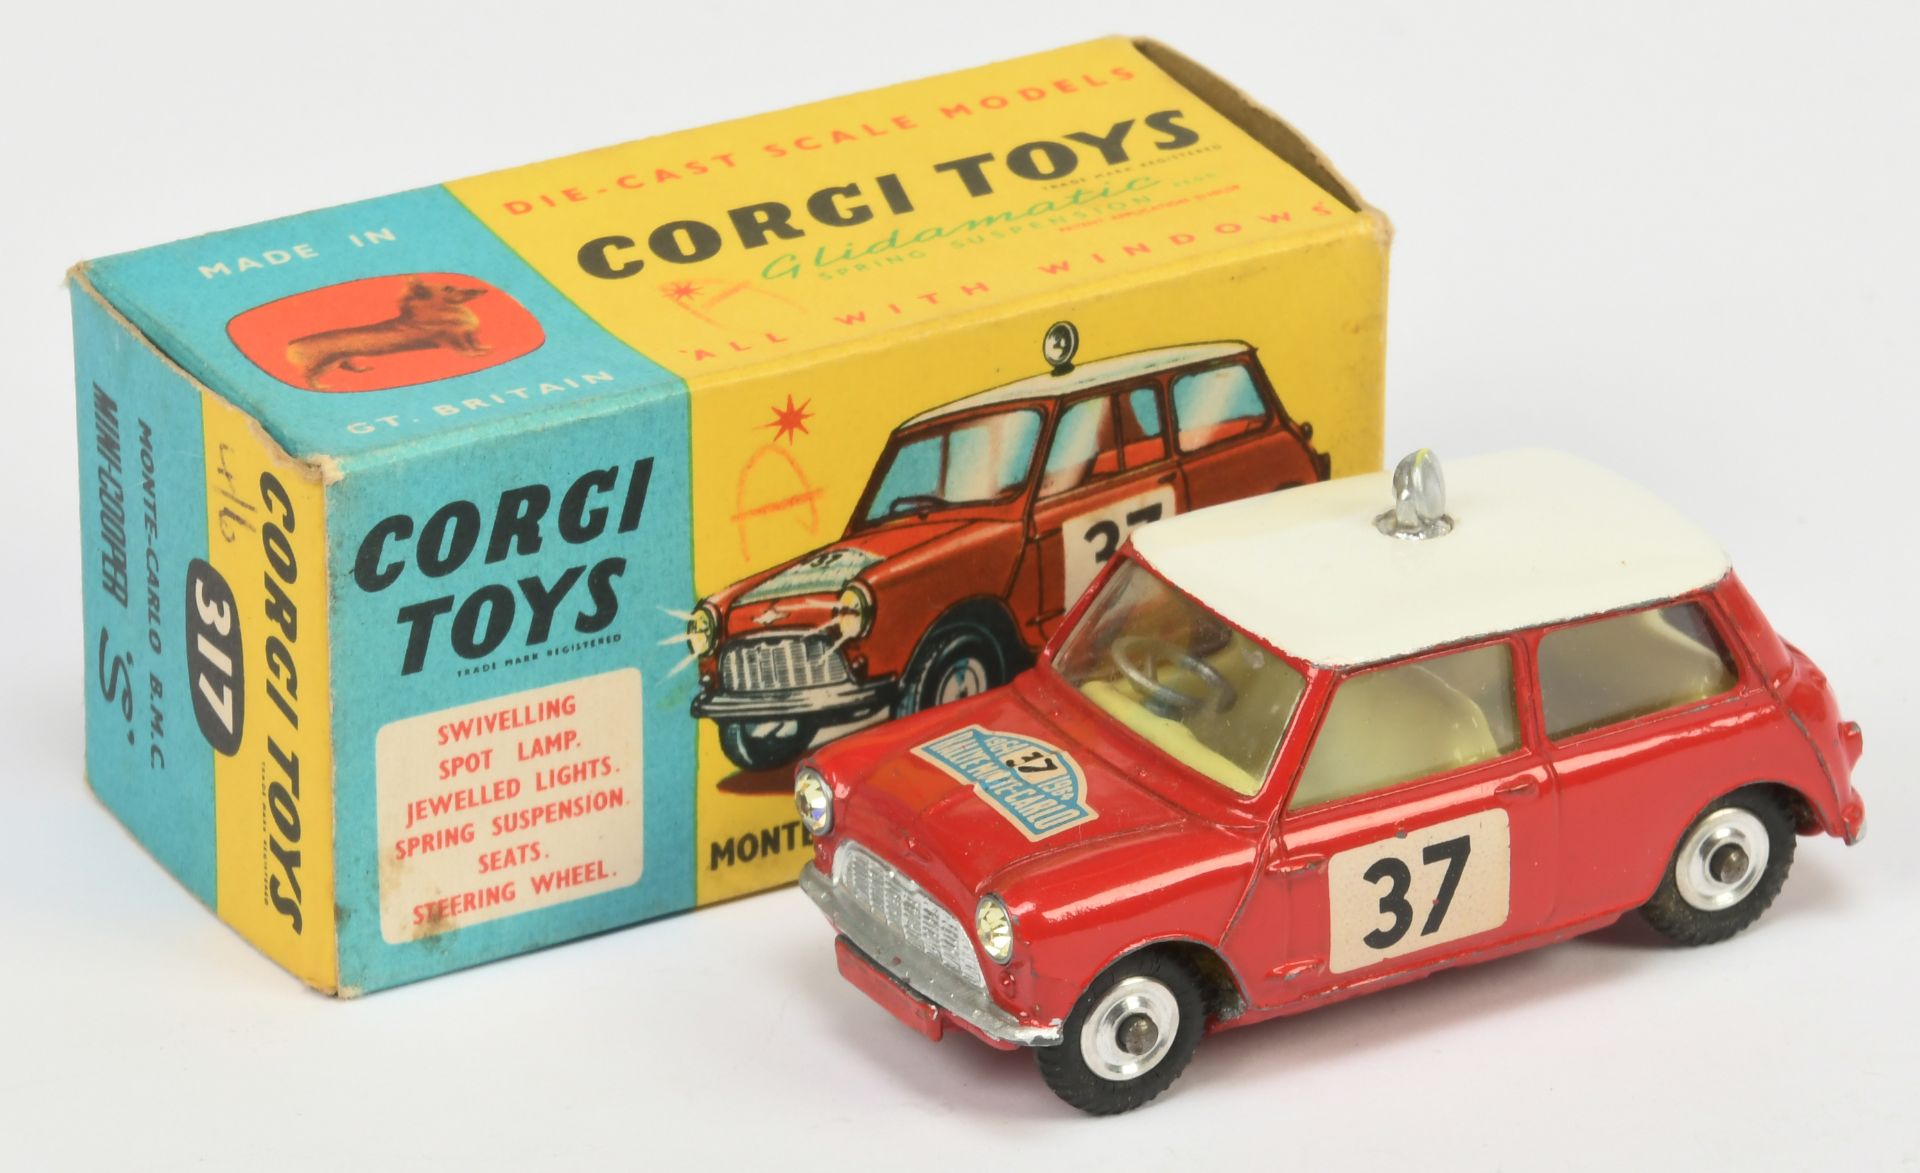 Corgi Toys 317 Morris Mini Cooper "Rallye Monte Carlo" - Red body, white roof with chrome spotlig...